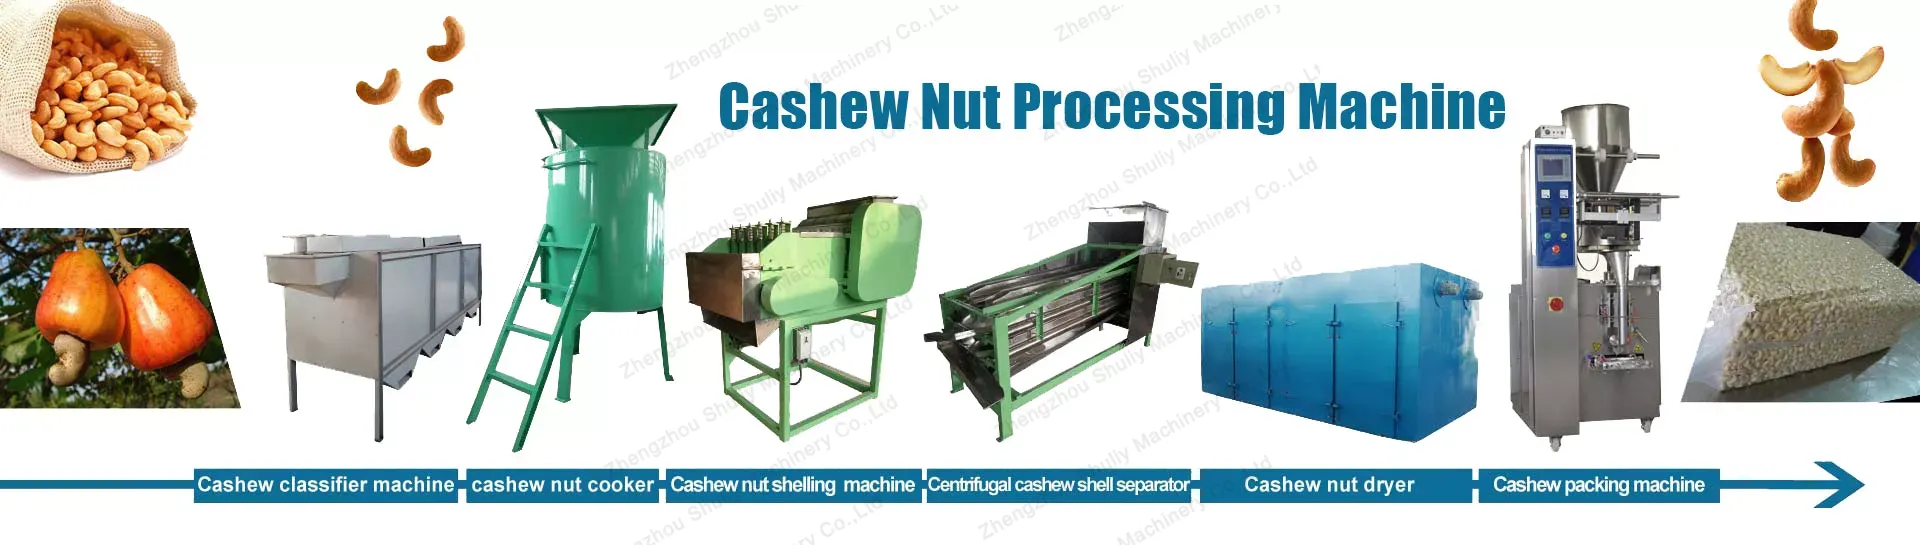 Cashew processing machinery